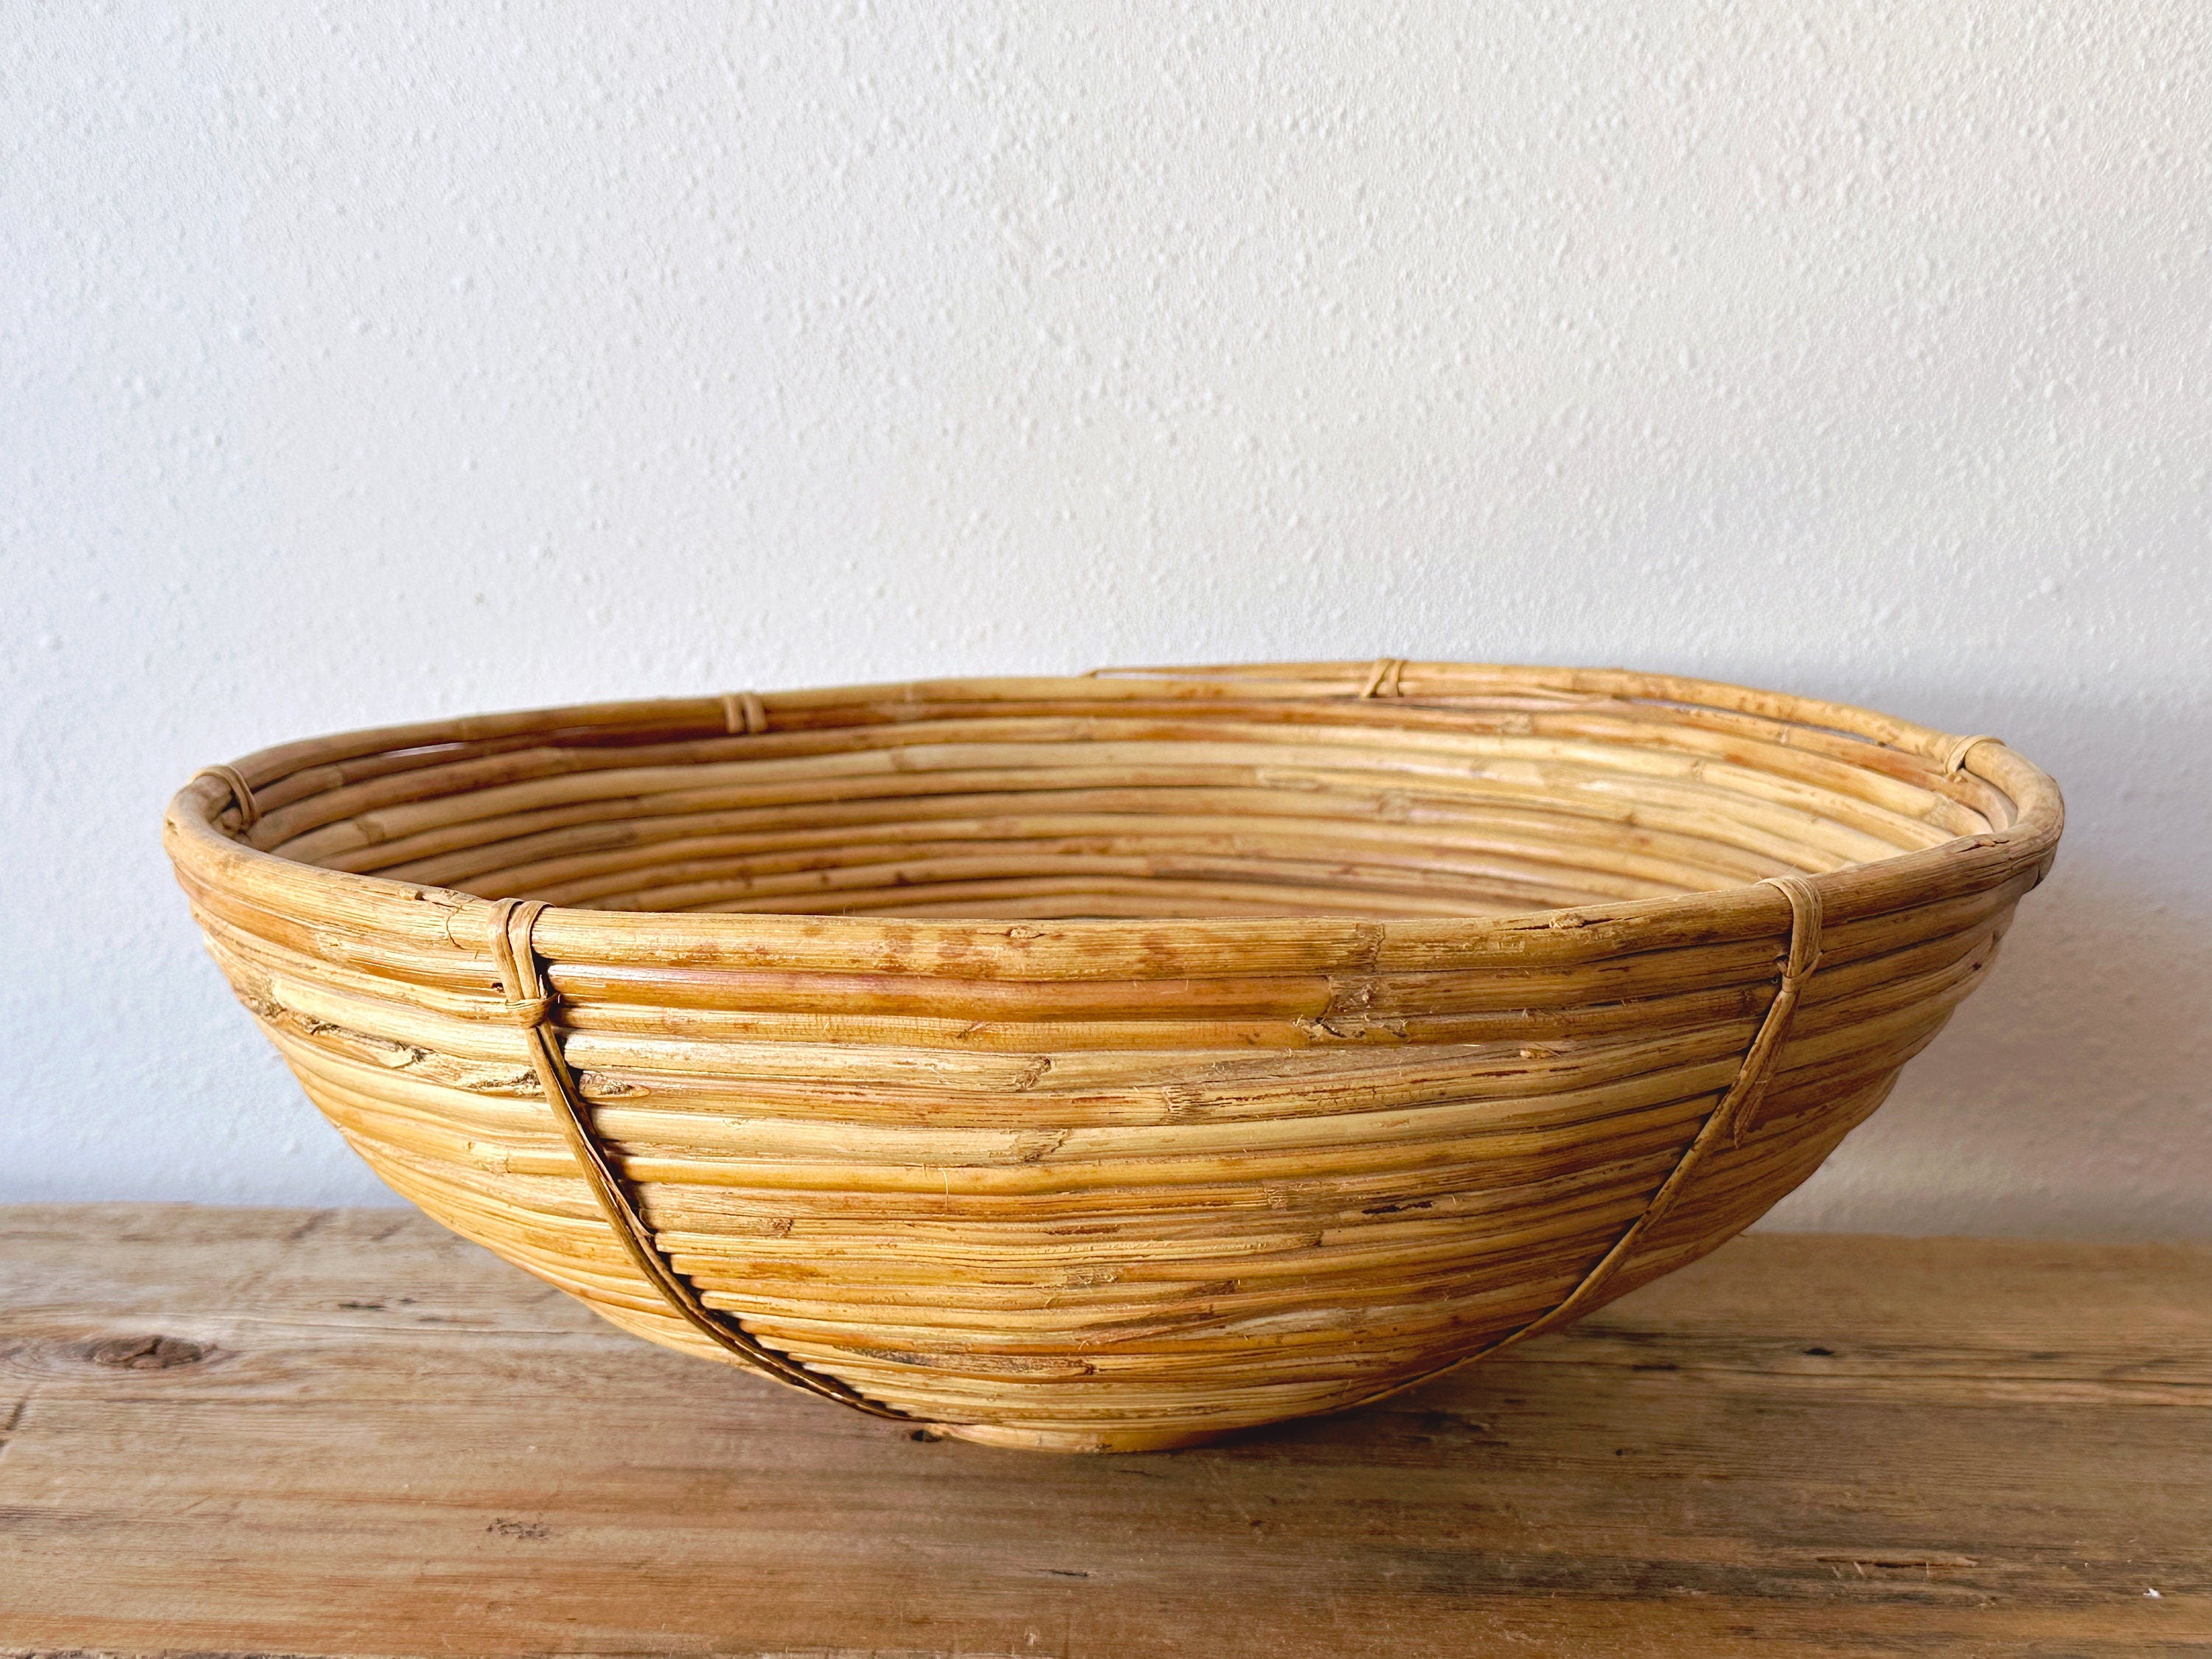 Large Vintage 1970's Rattan Bamboo Coiled Round Basket | Farmhouse Decor Wicker Woven Fruit Bowl | Boho Chic Centerpiece Bowl Housewarming